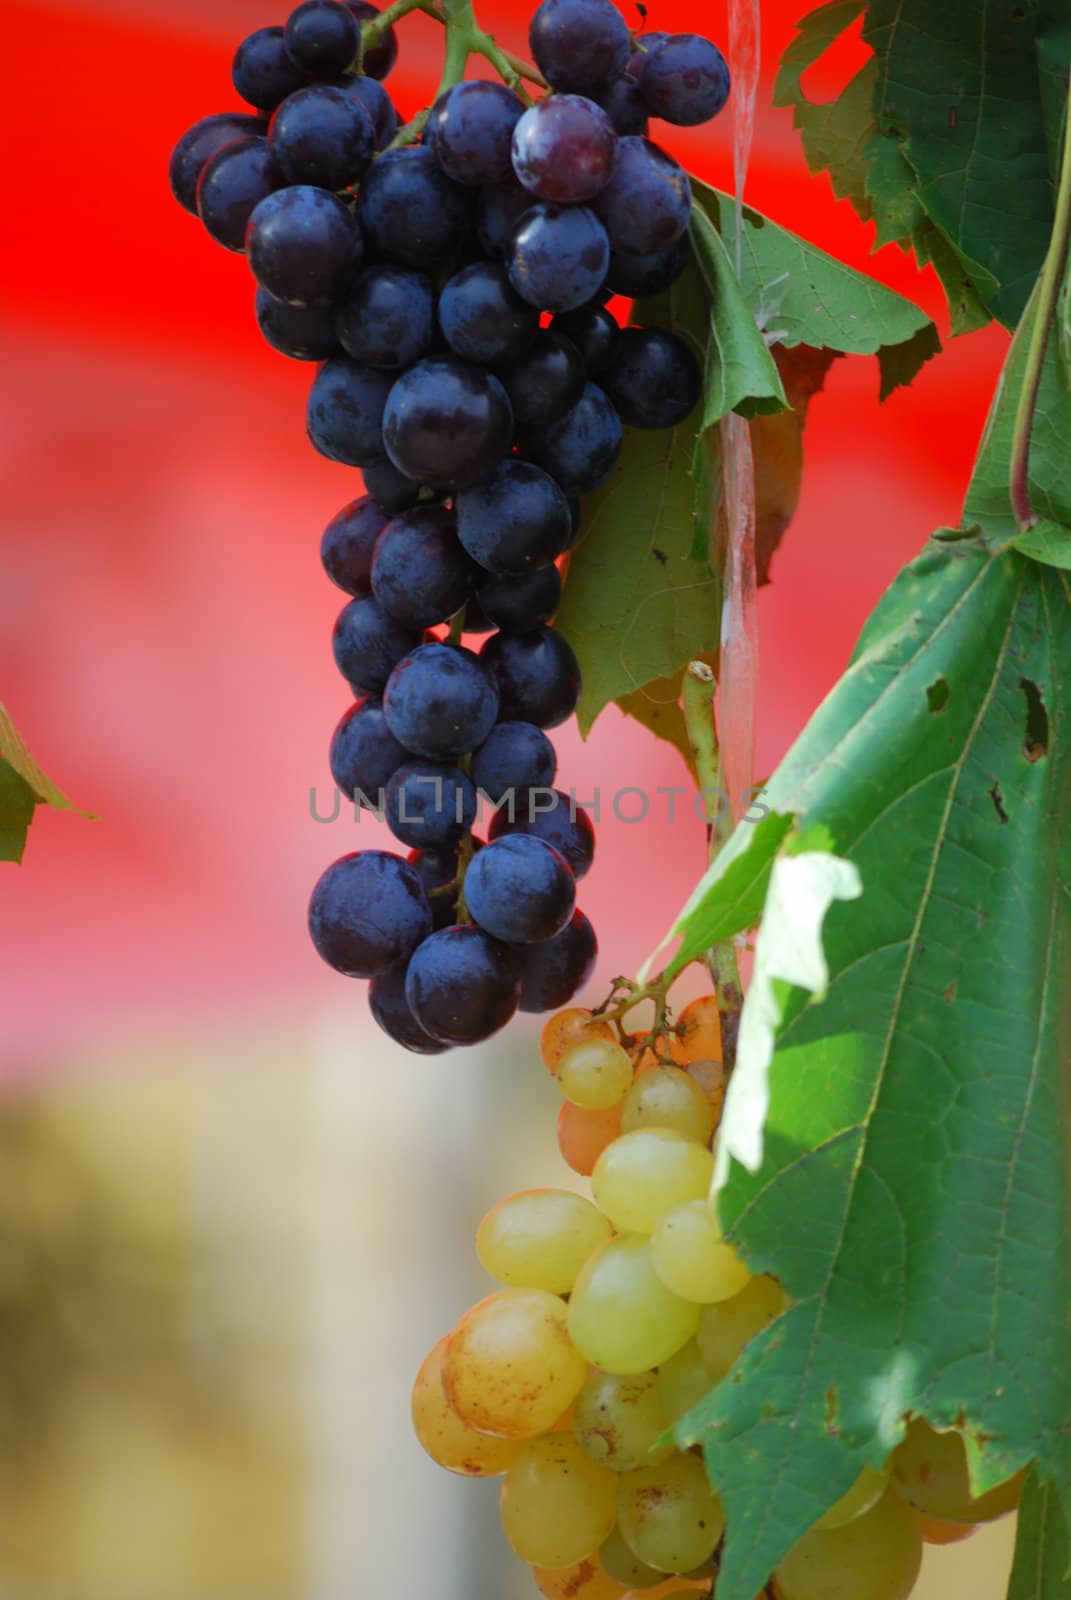 Wine grapes by zagart36